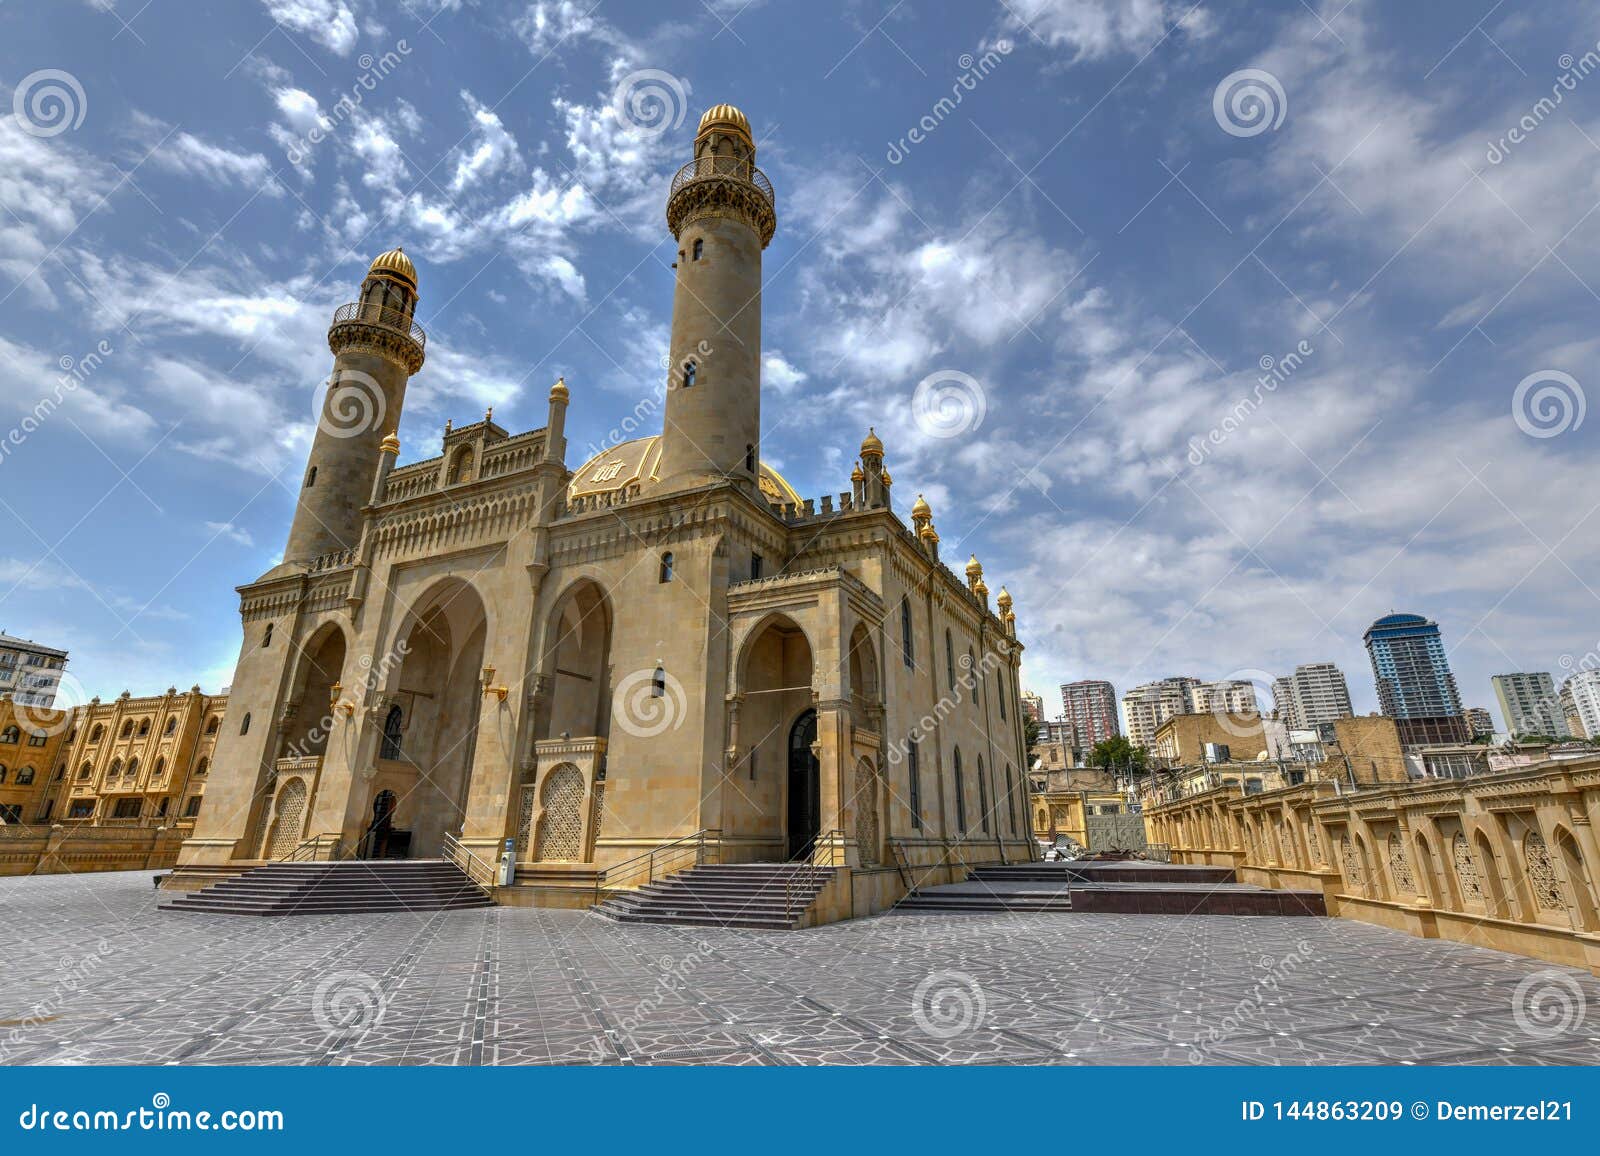 taza pir mosque - baku, azerbaijan